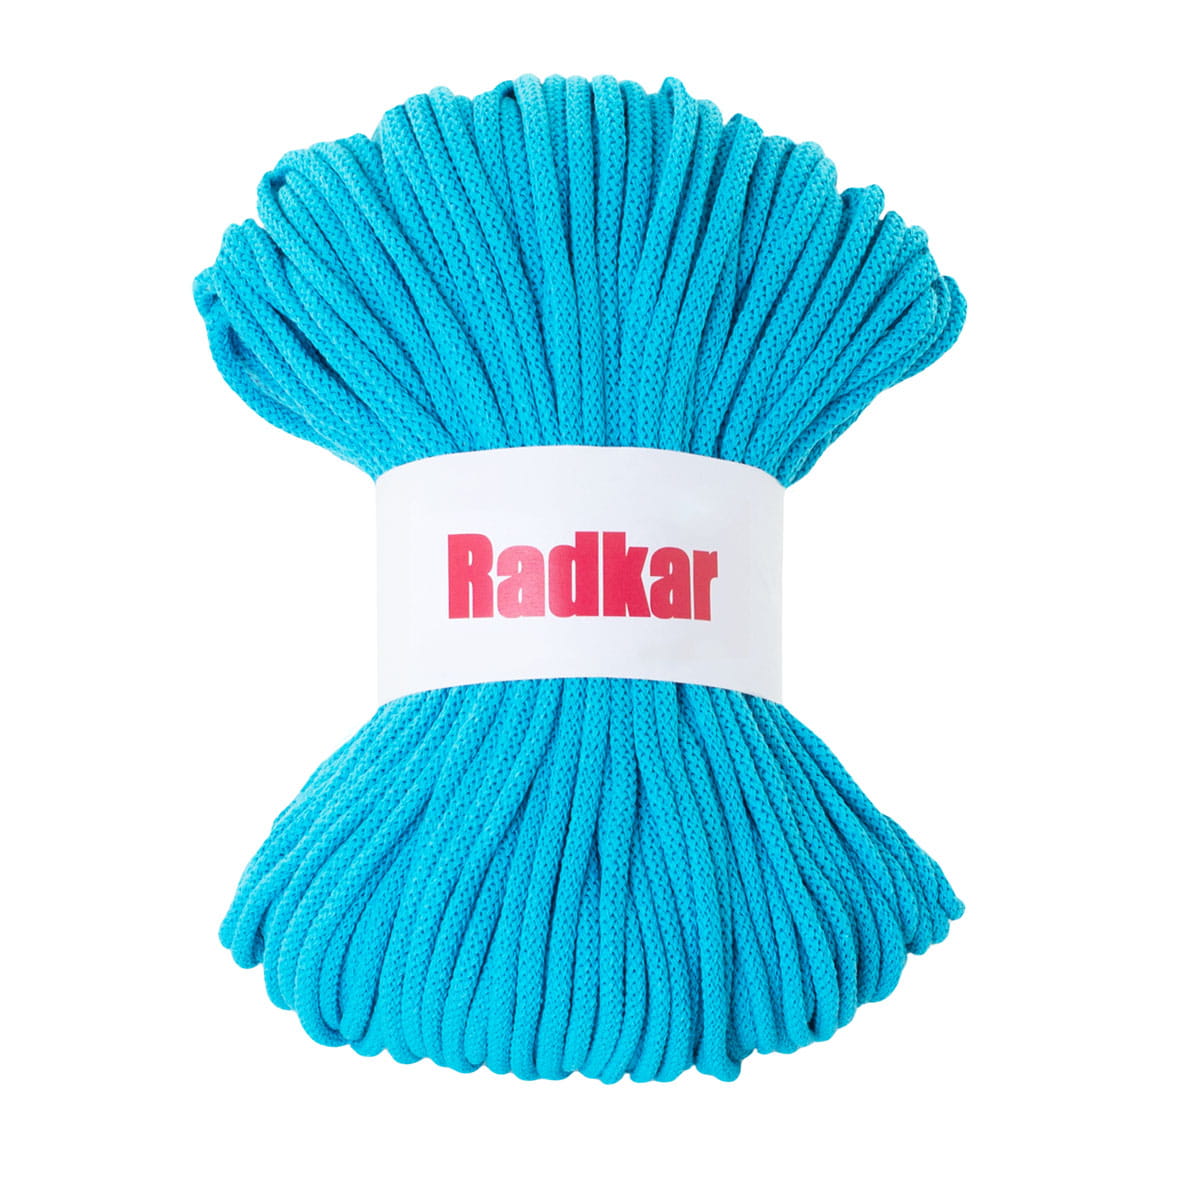 5mm cotton cordd braided with core radkar macrame craft art knitting crochetting